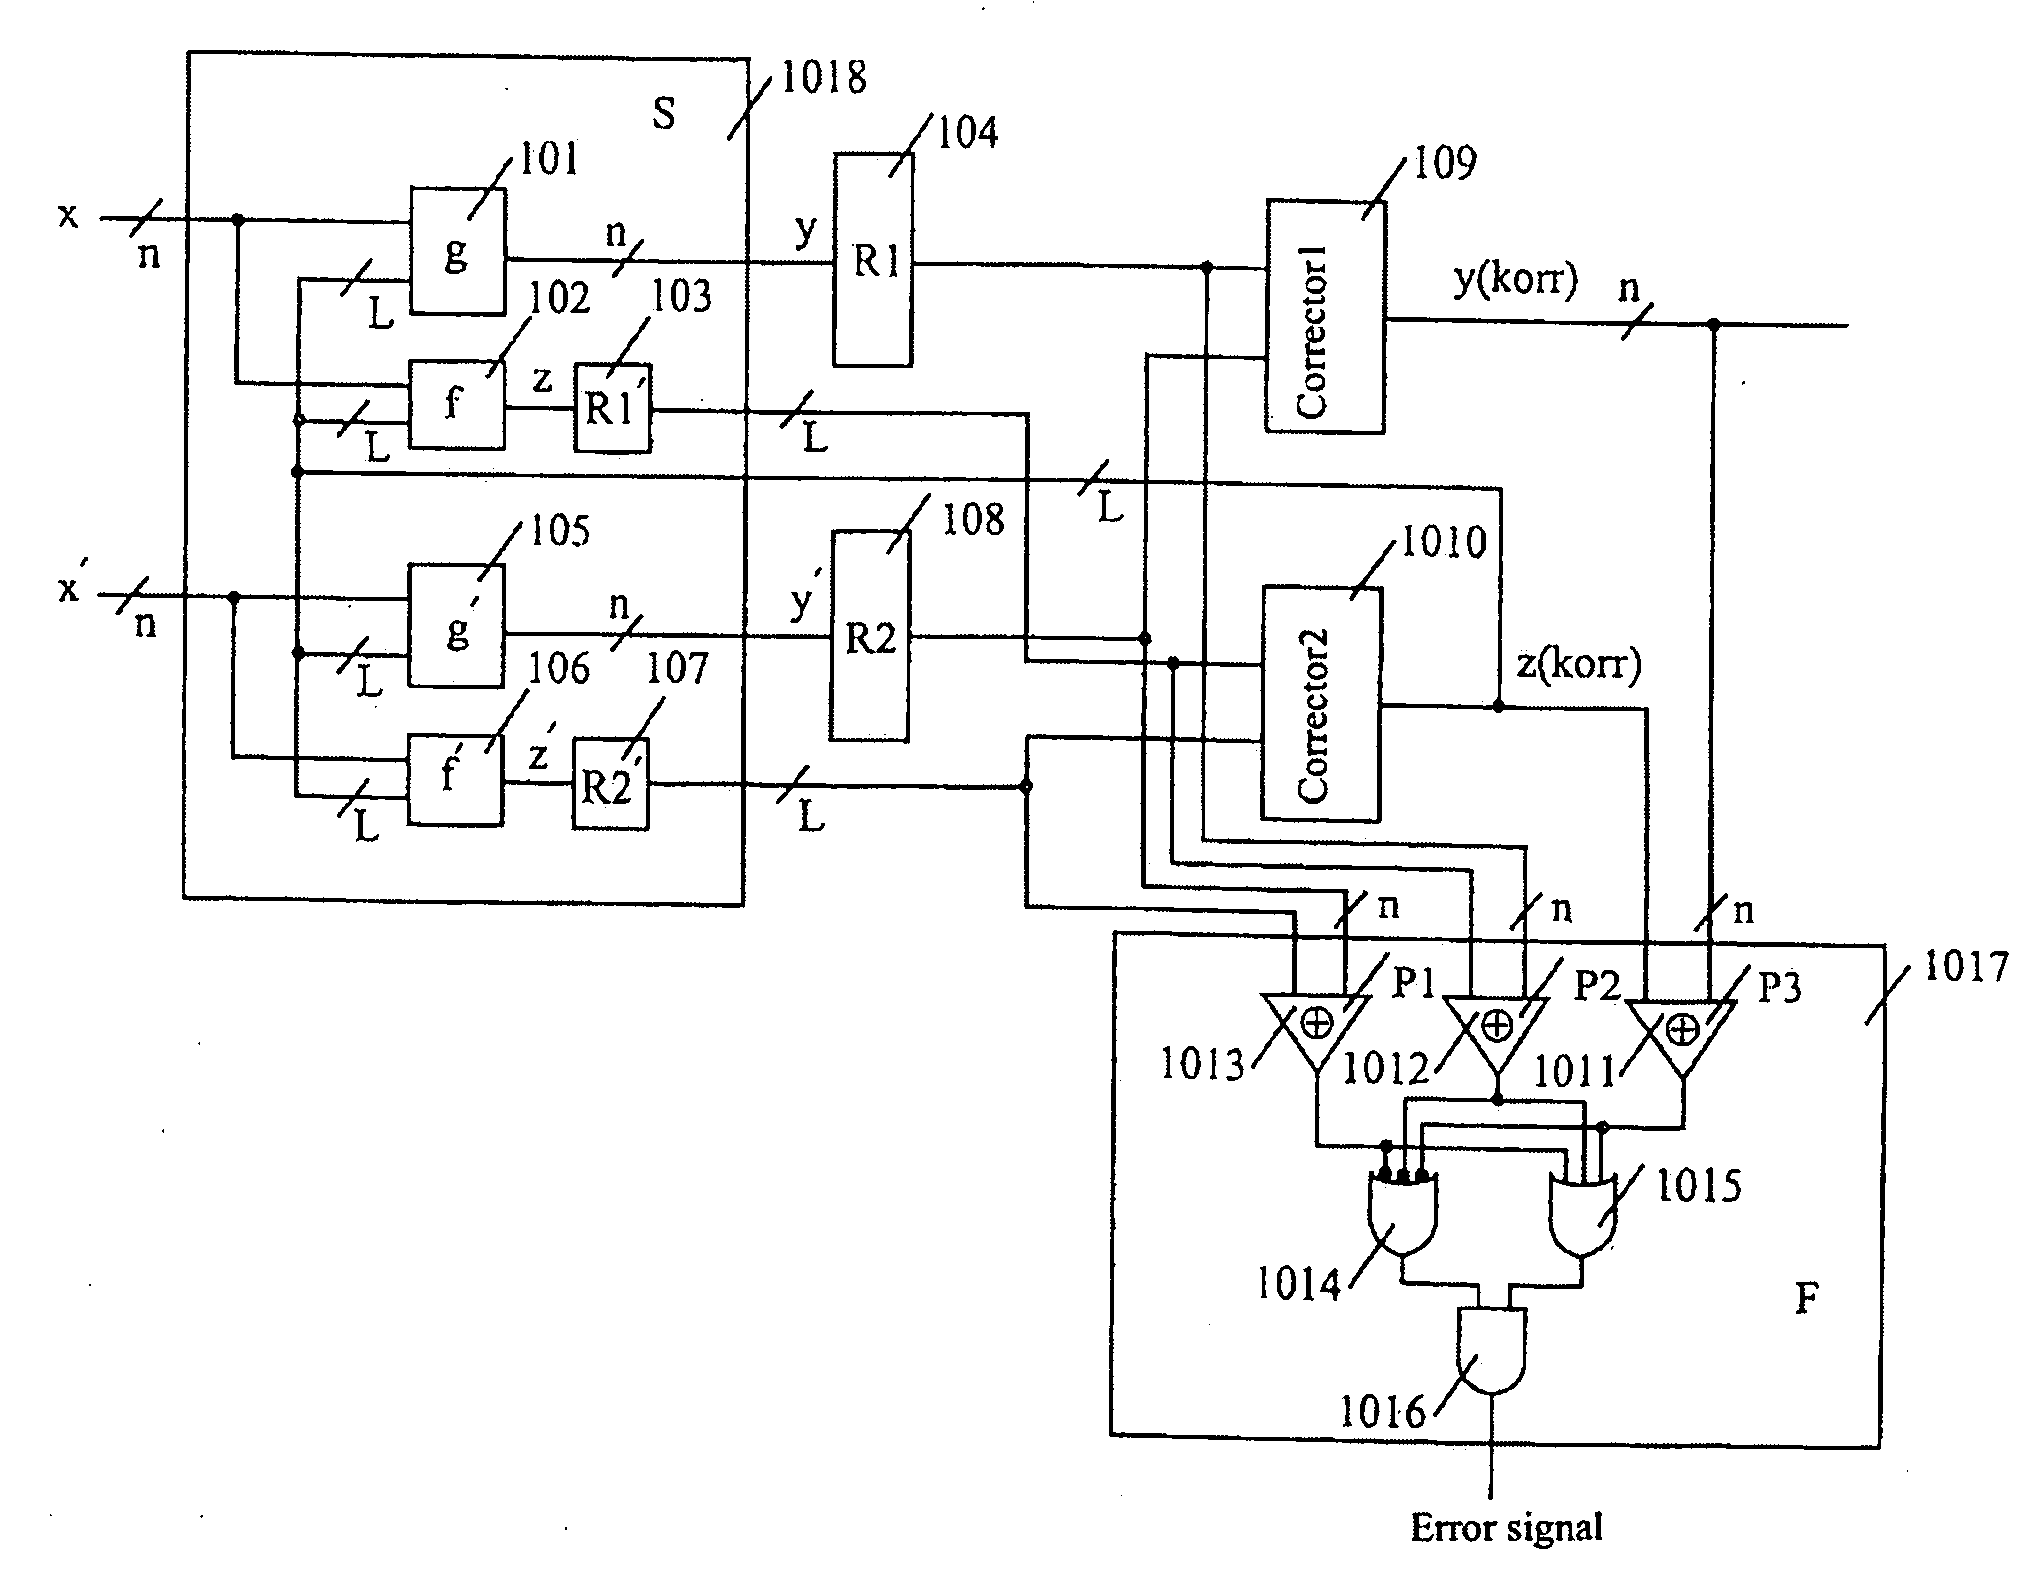 Circuit arrangement